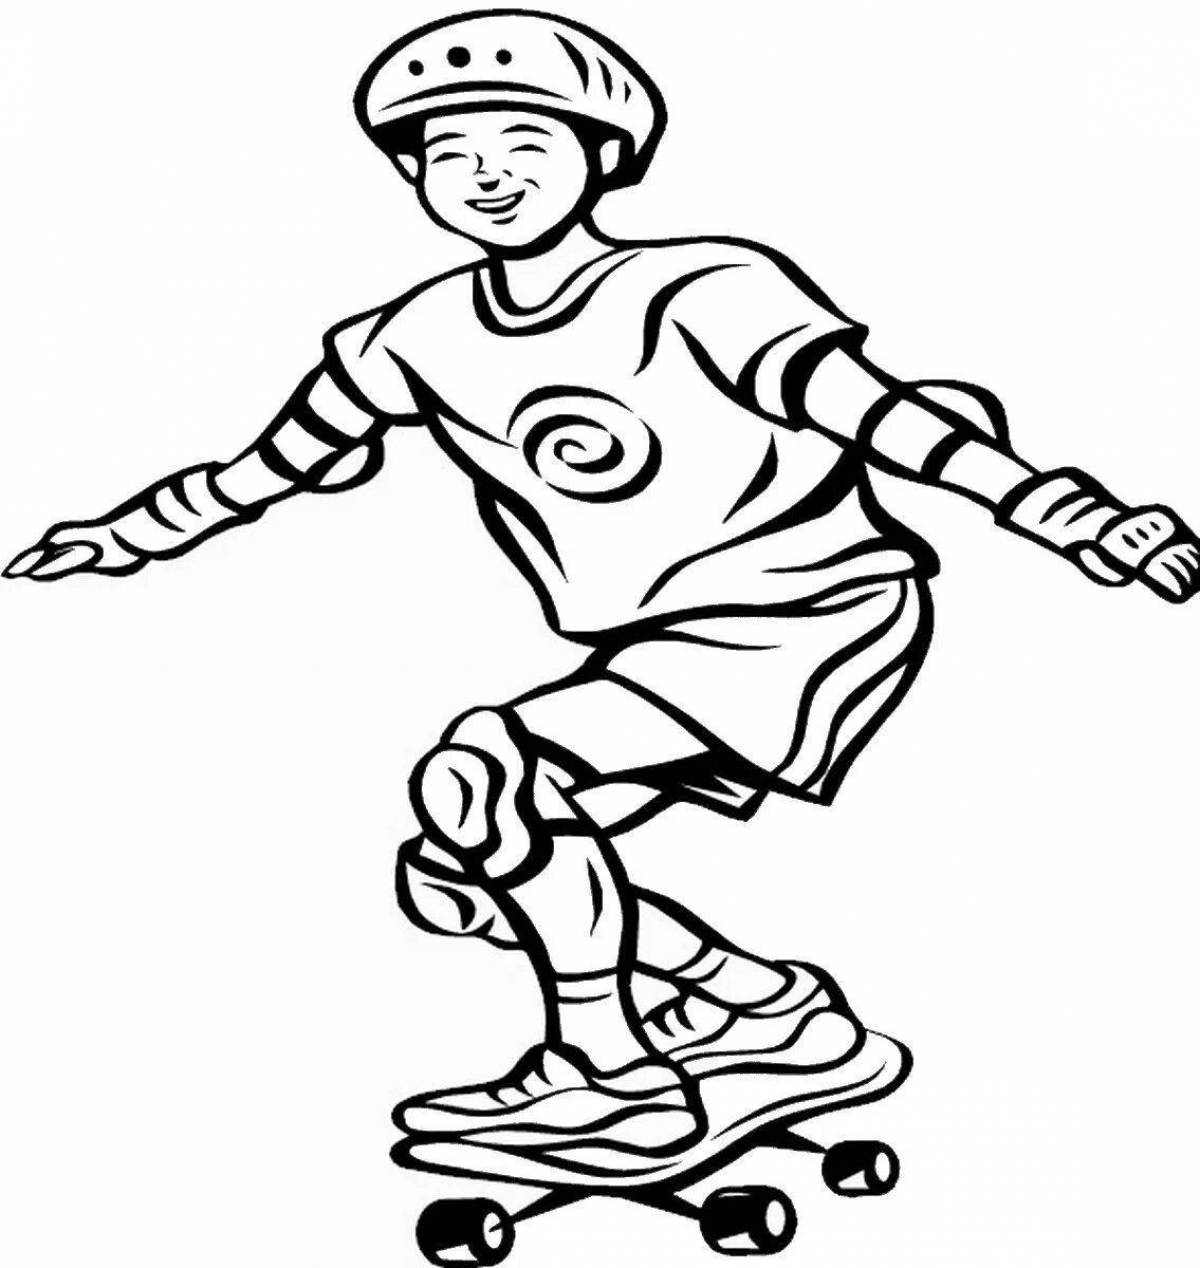 Coloring page daring skateboarder